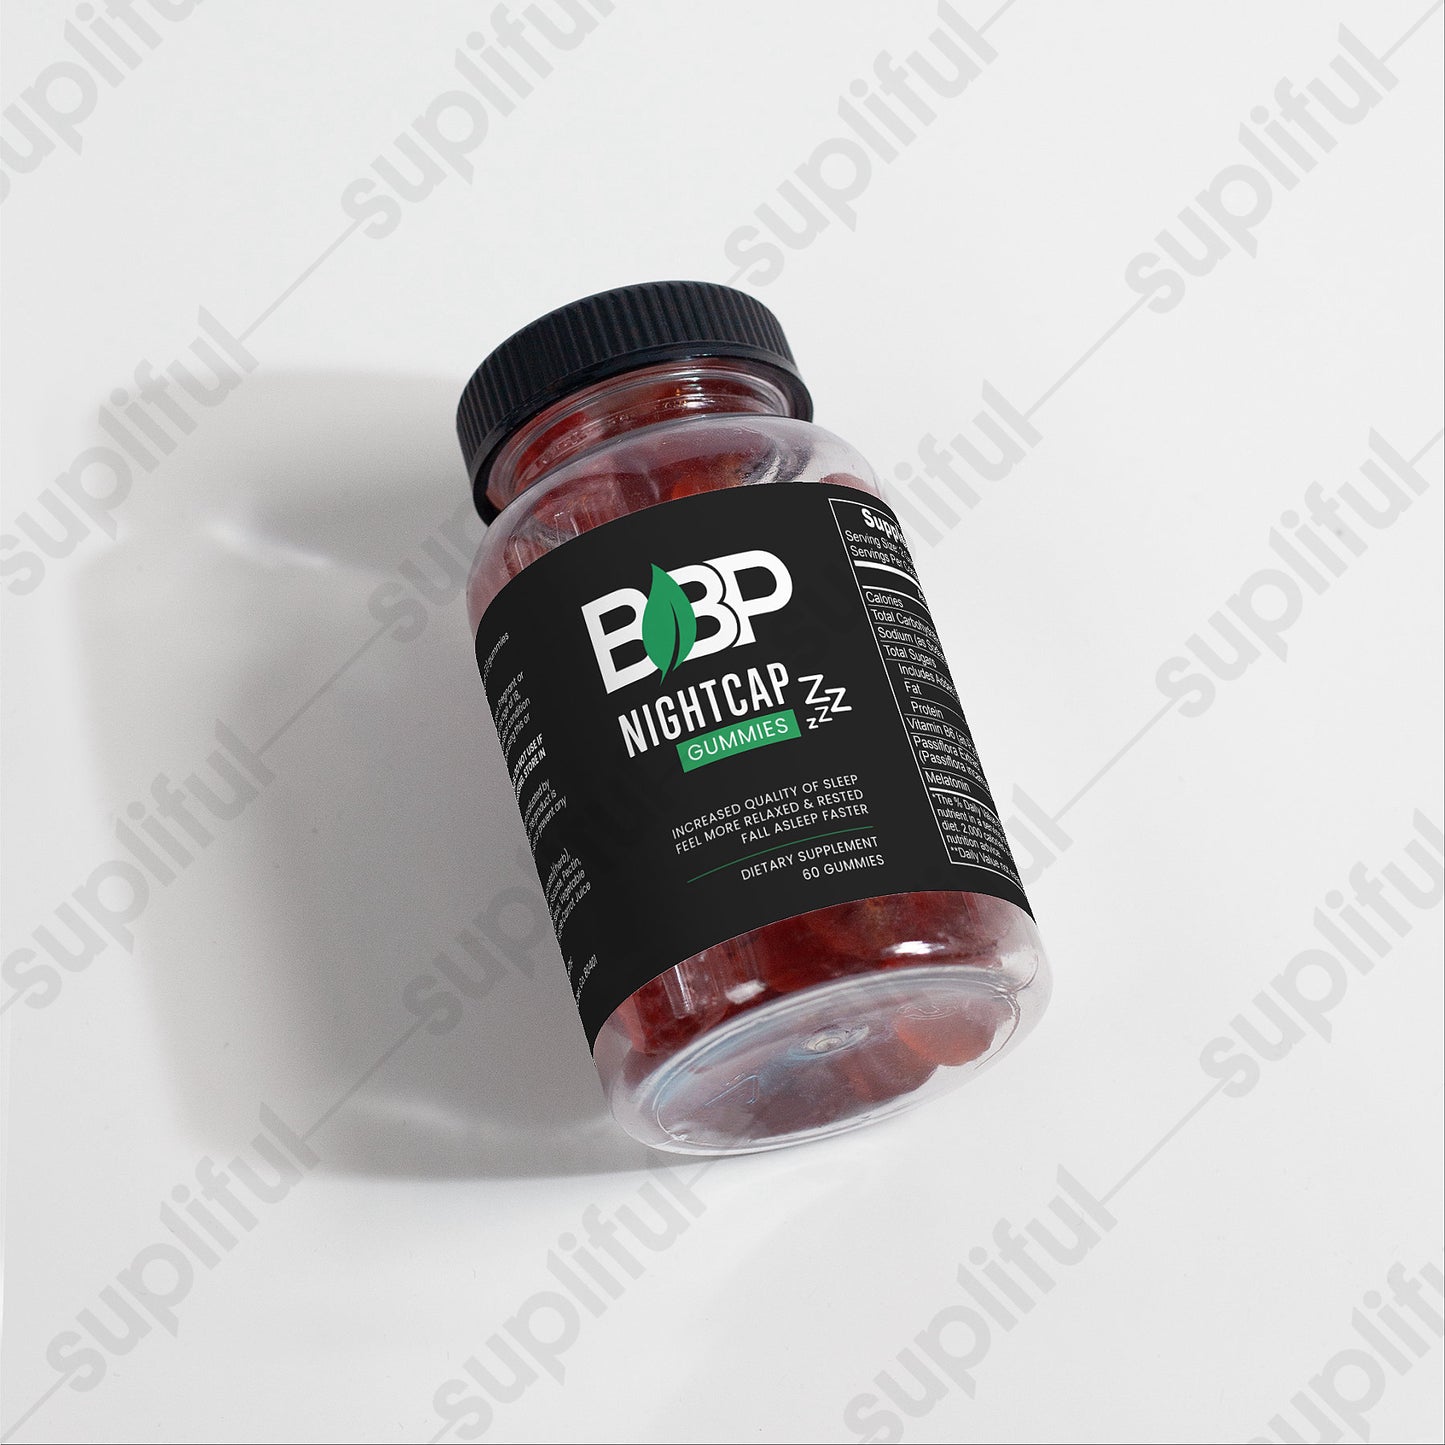 BBP Nightcap Gummies (Adult)